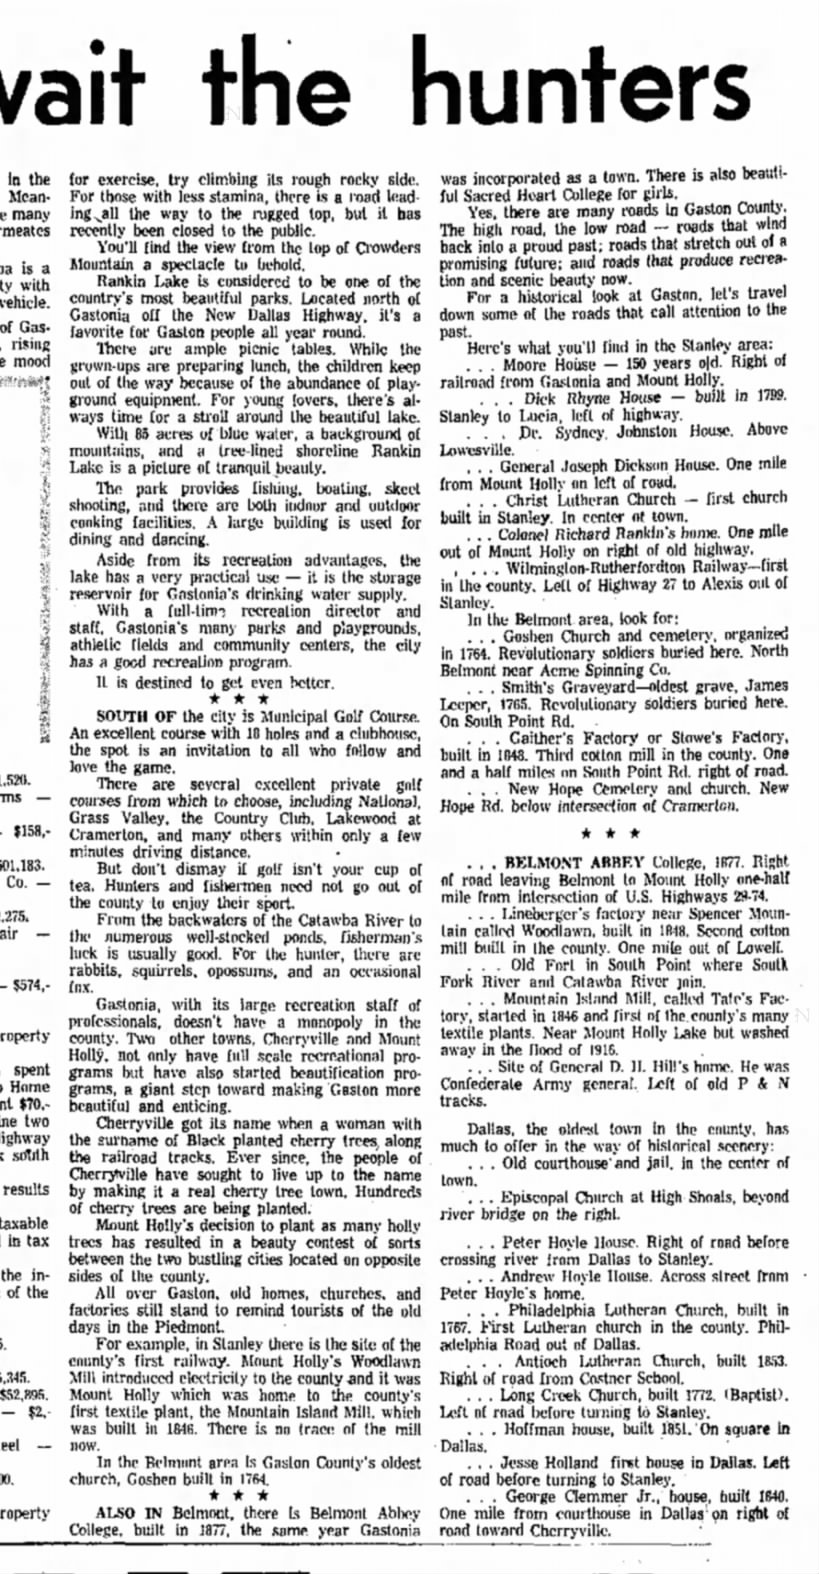 GASTON POINTS OF INTEREST - APRIL 15, 1972